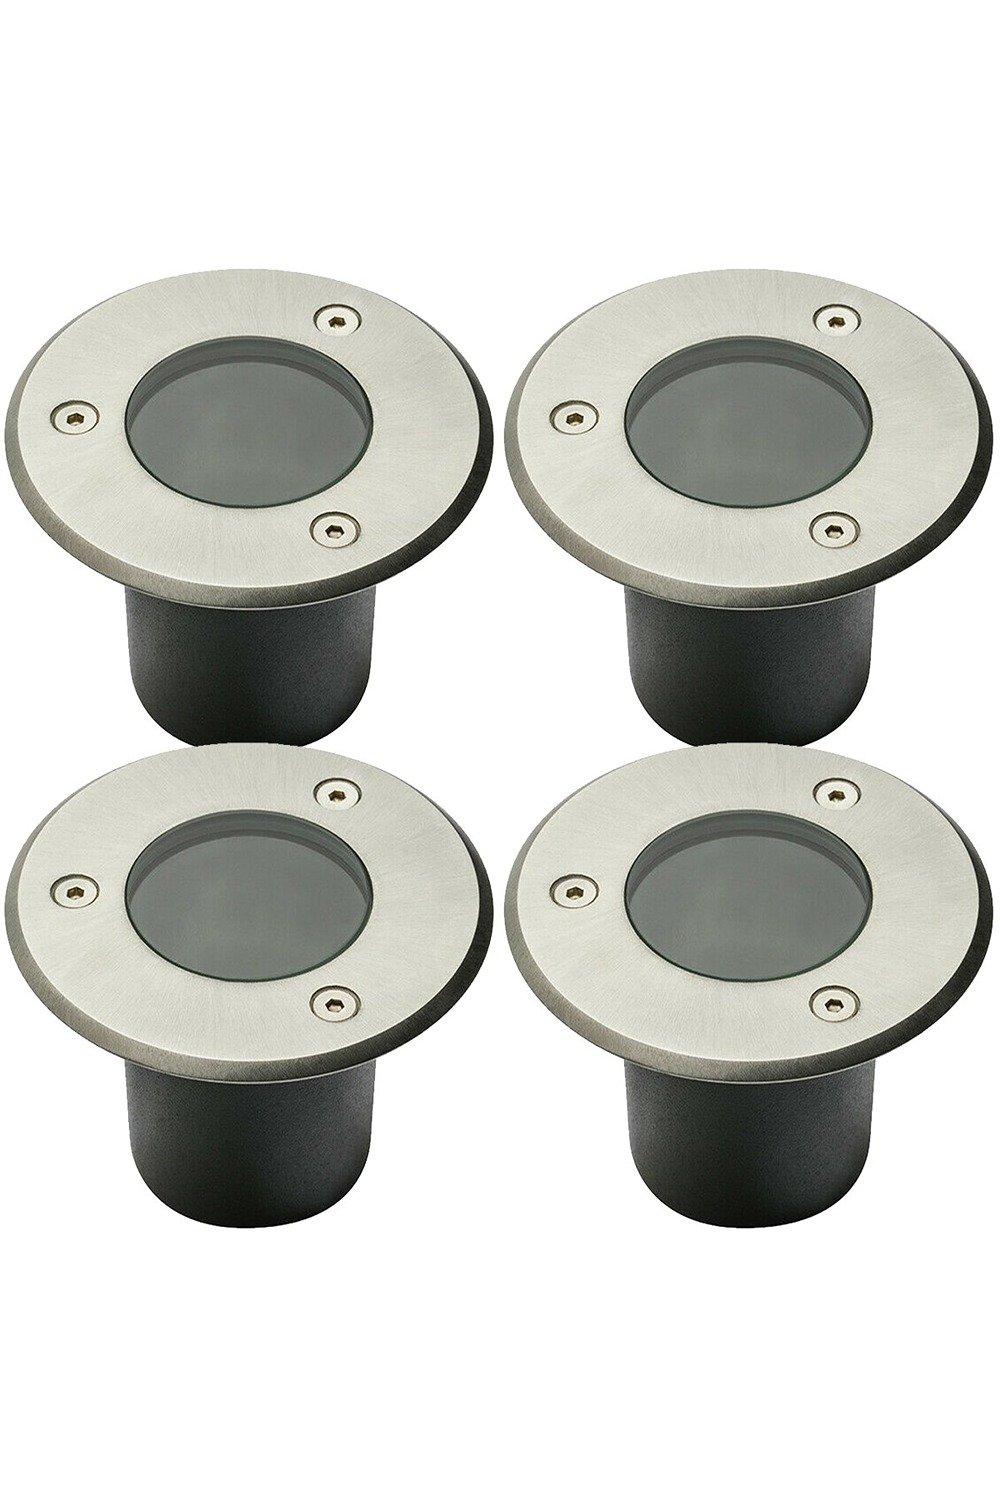 CGC Lighting 'Nola' Four Round Small Stainless Steel Inground Or Decking Lights